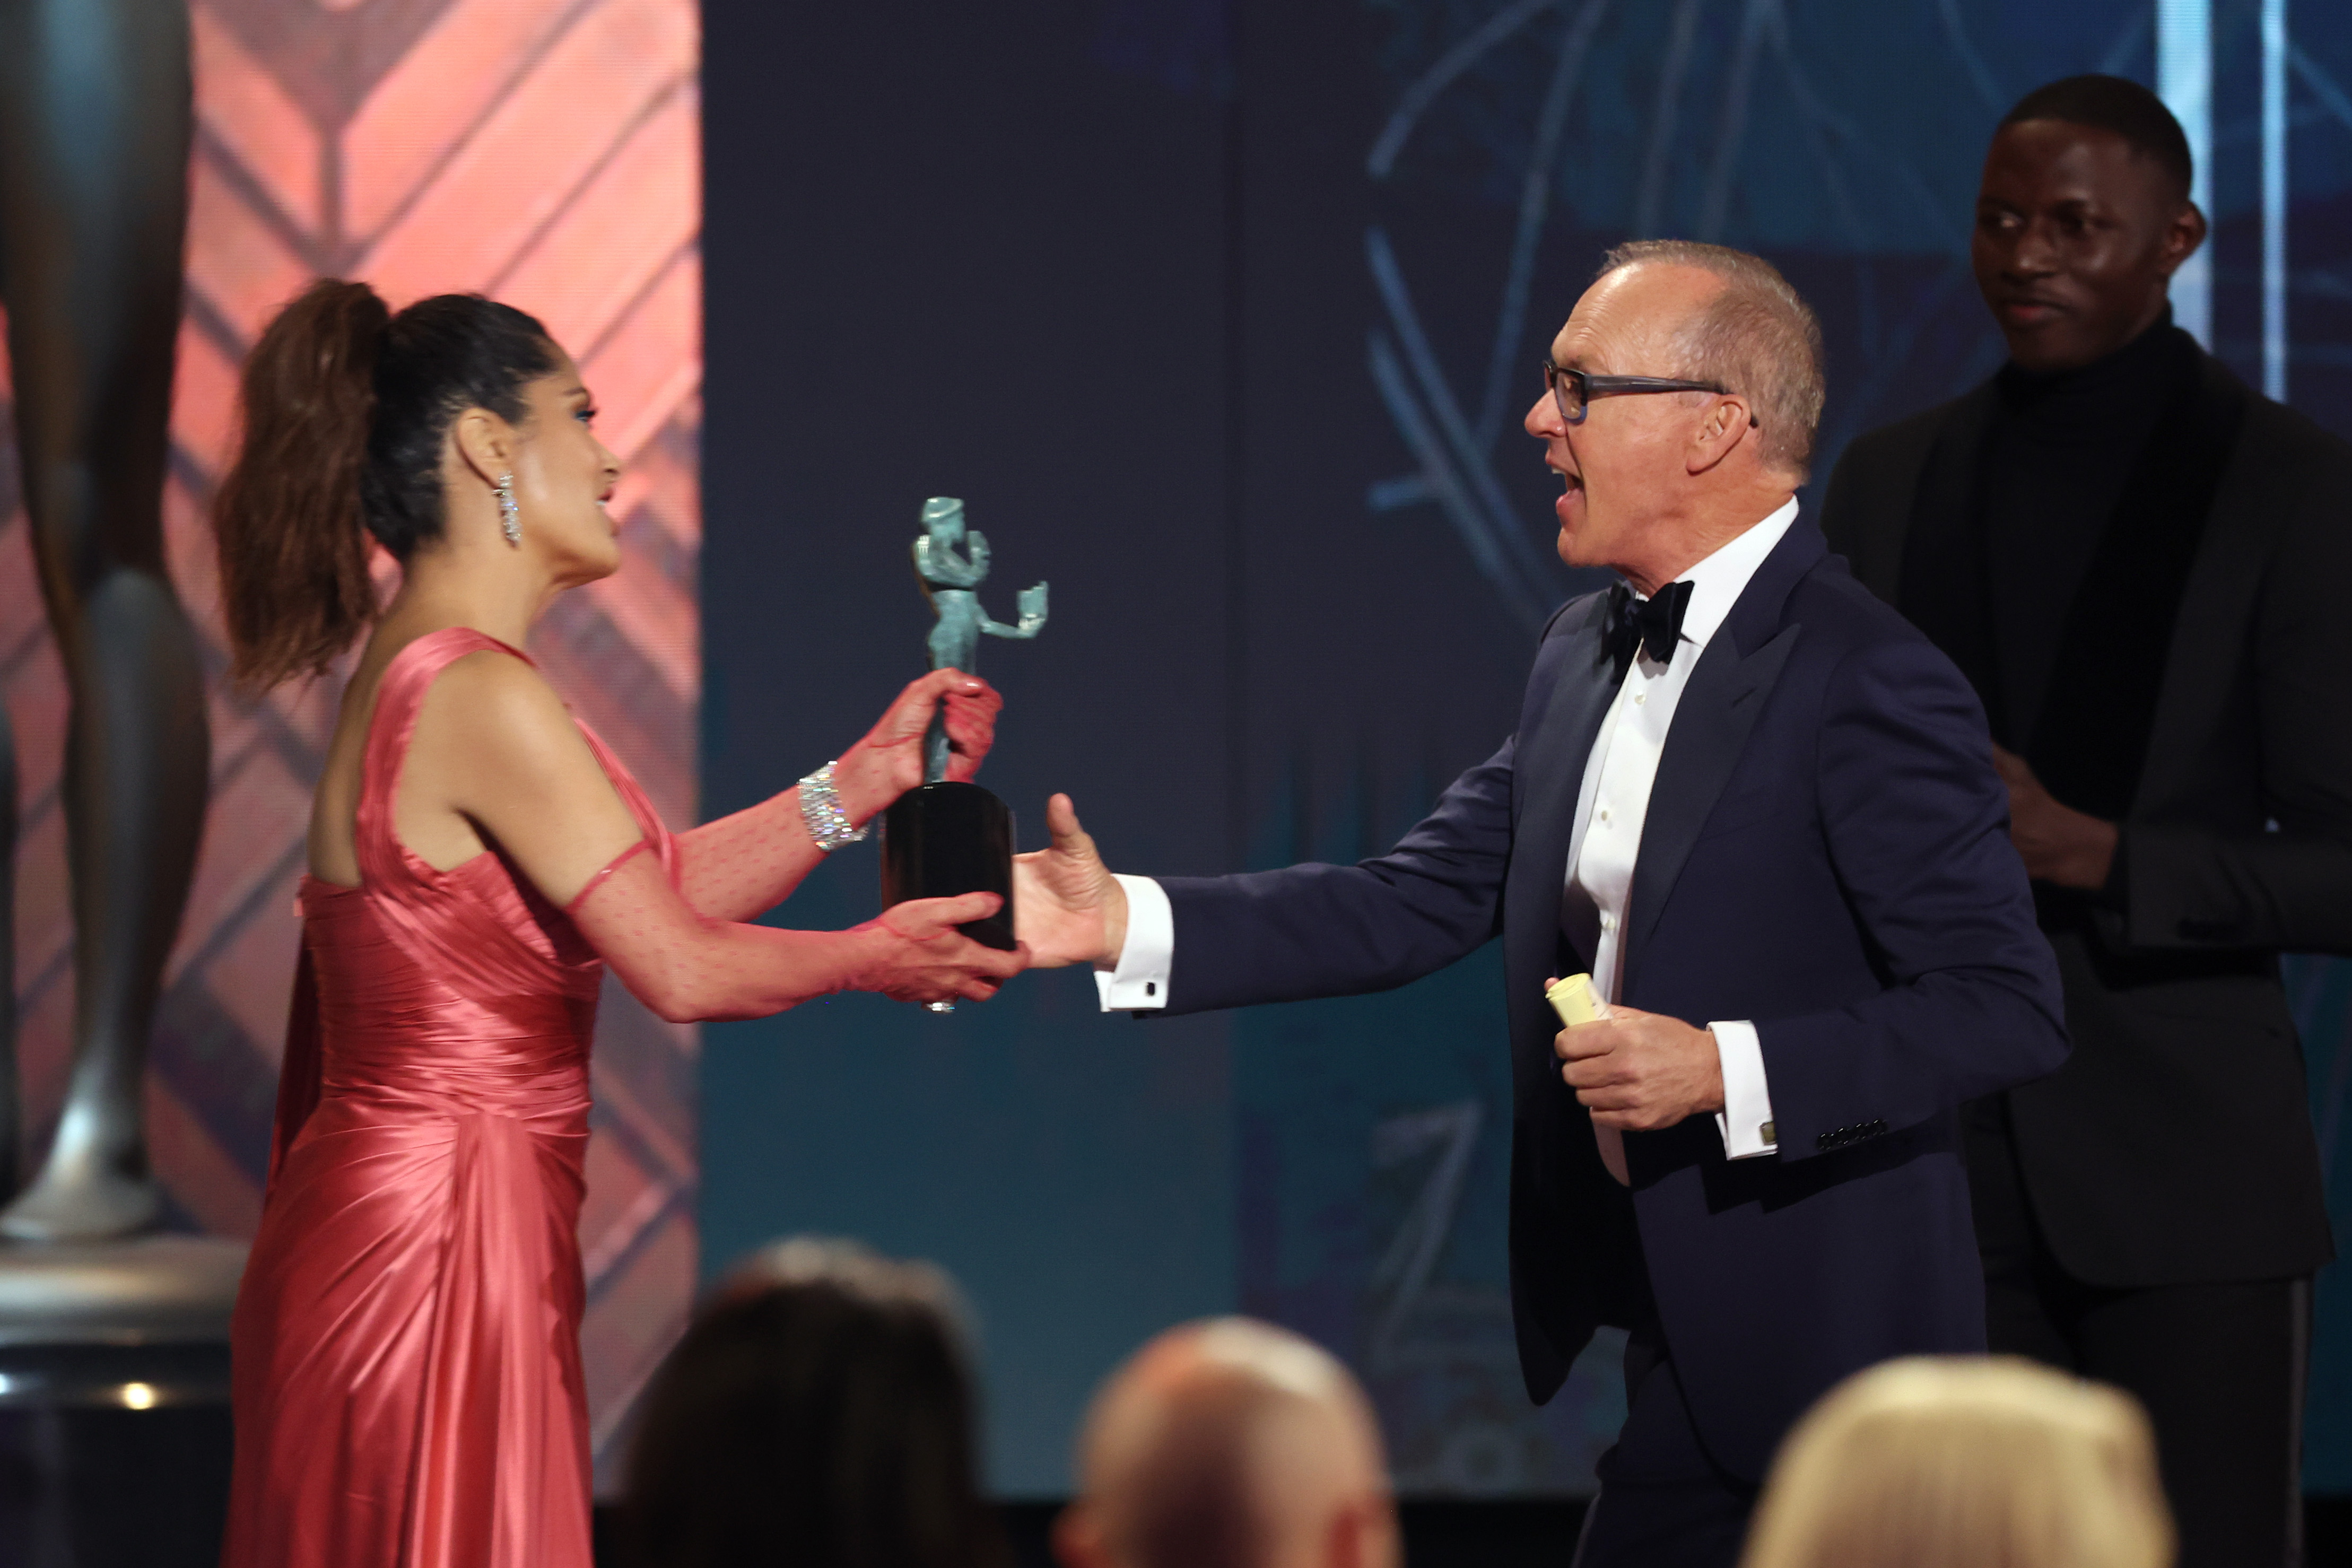 Salma Hayek wearing a red dress and handing out an award to Michael Keaton at the SAG Awards 2022